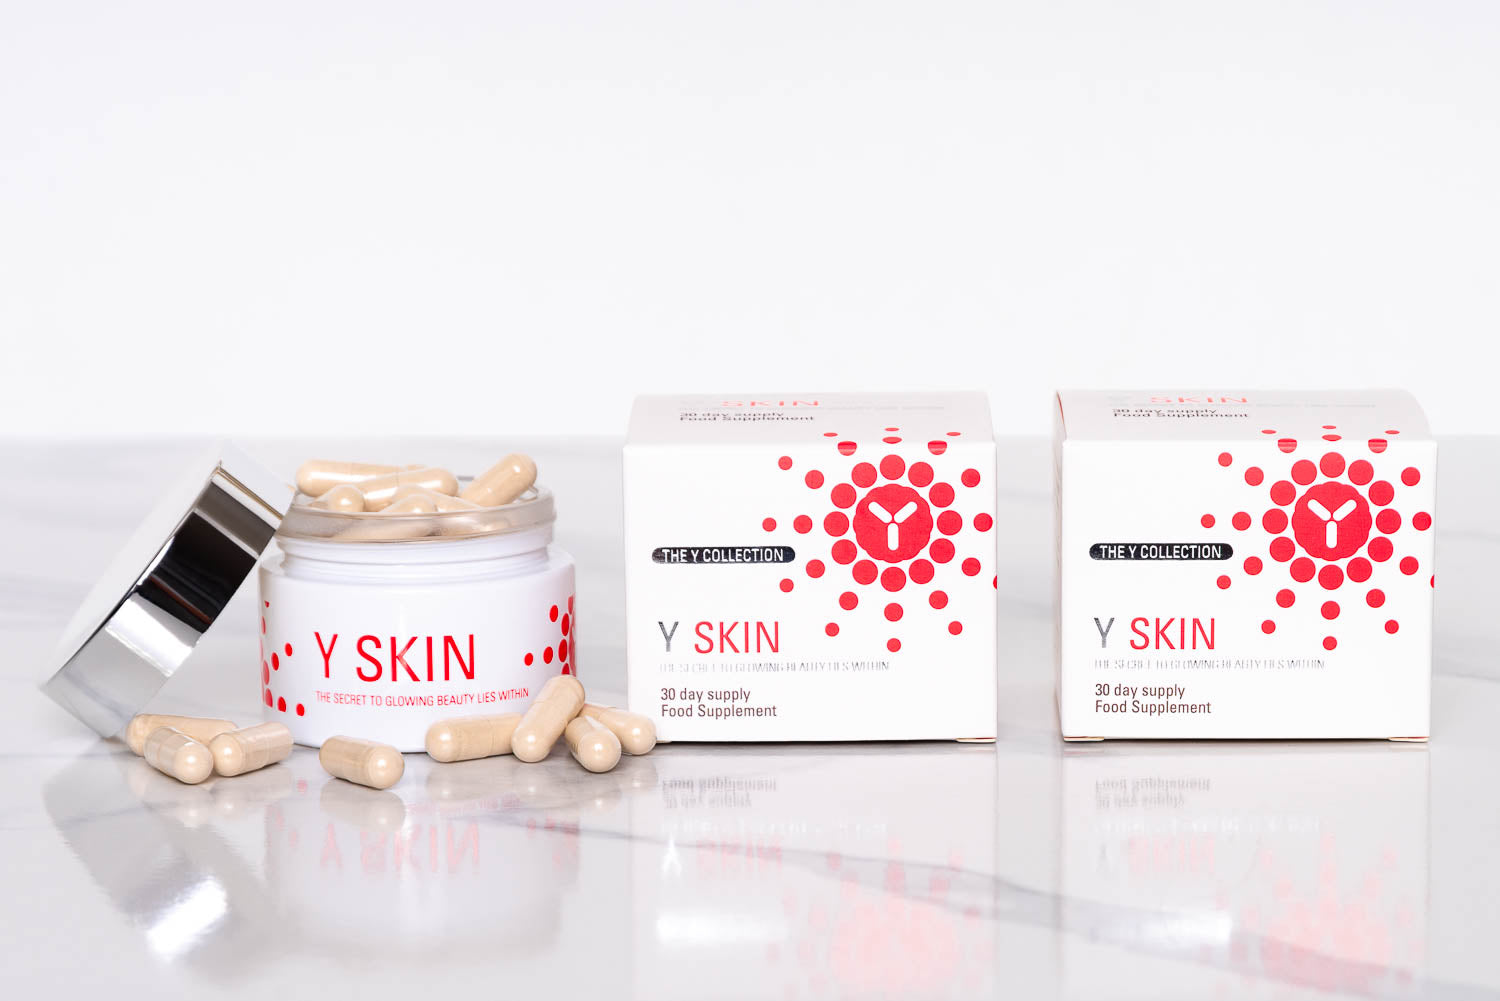 Y SKIN - anti ageing supplement